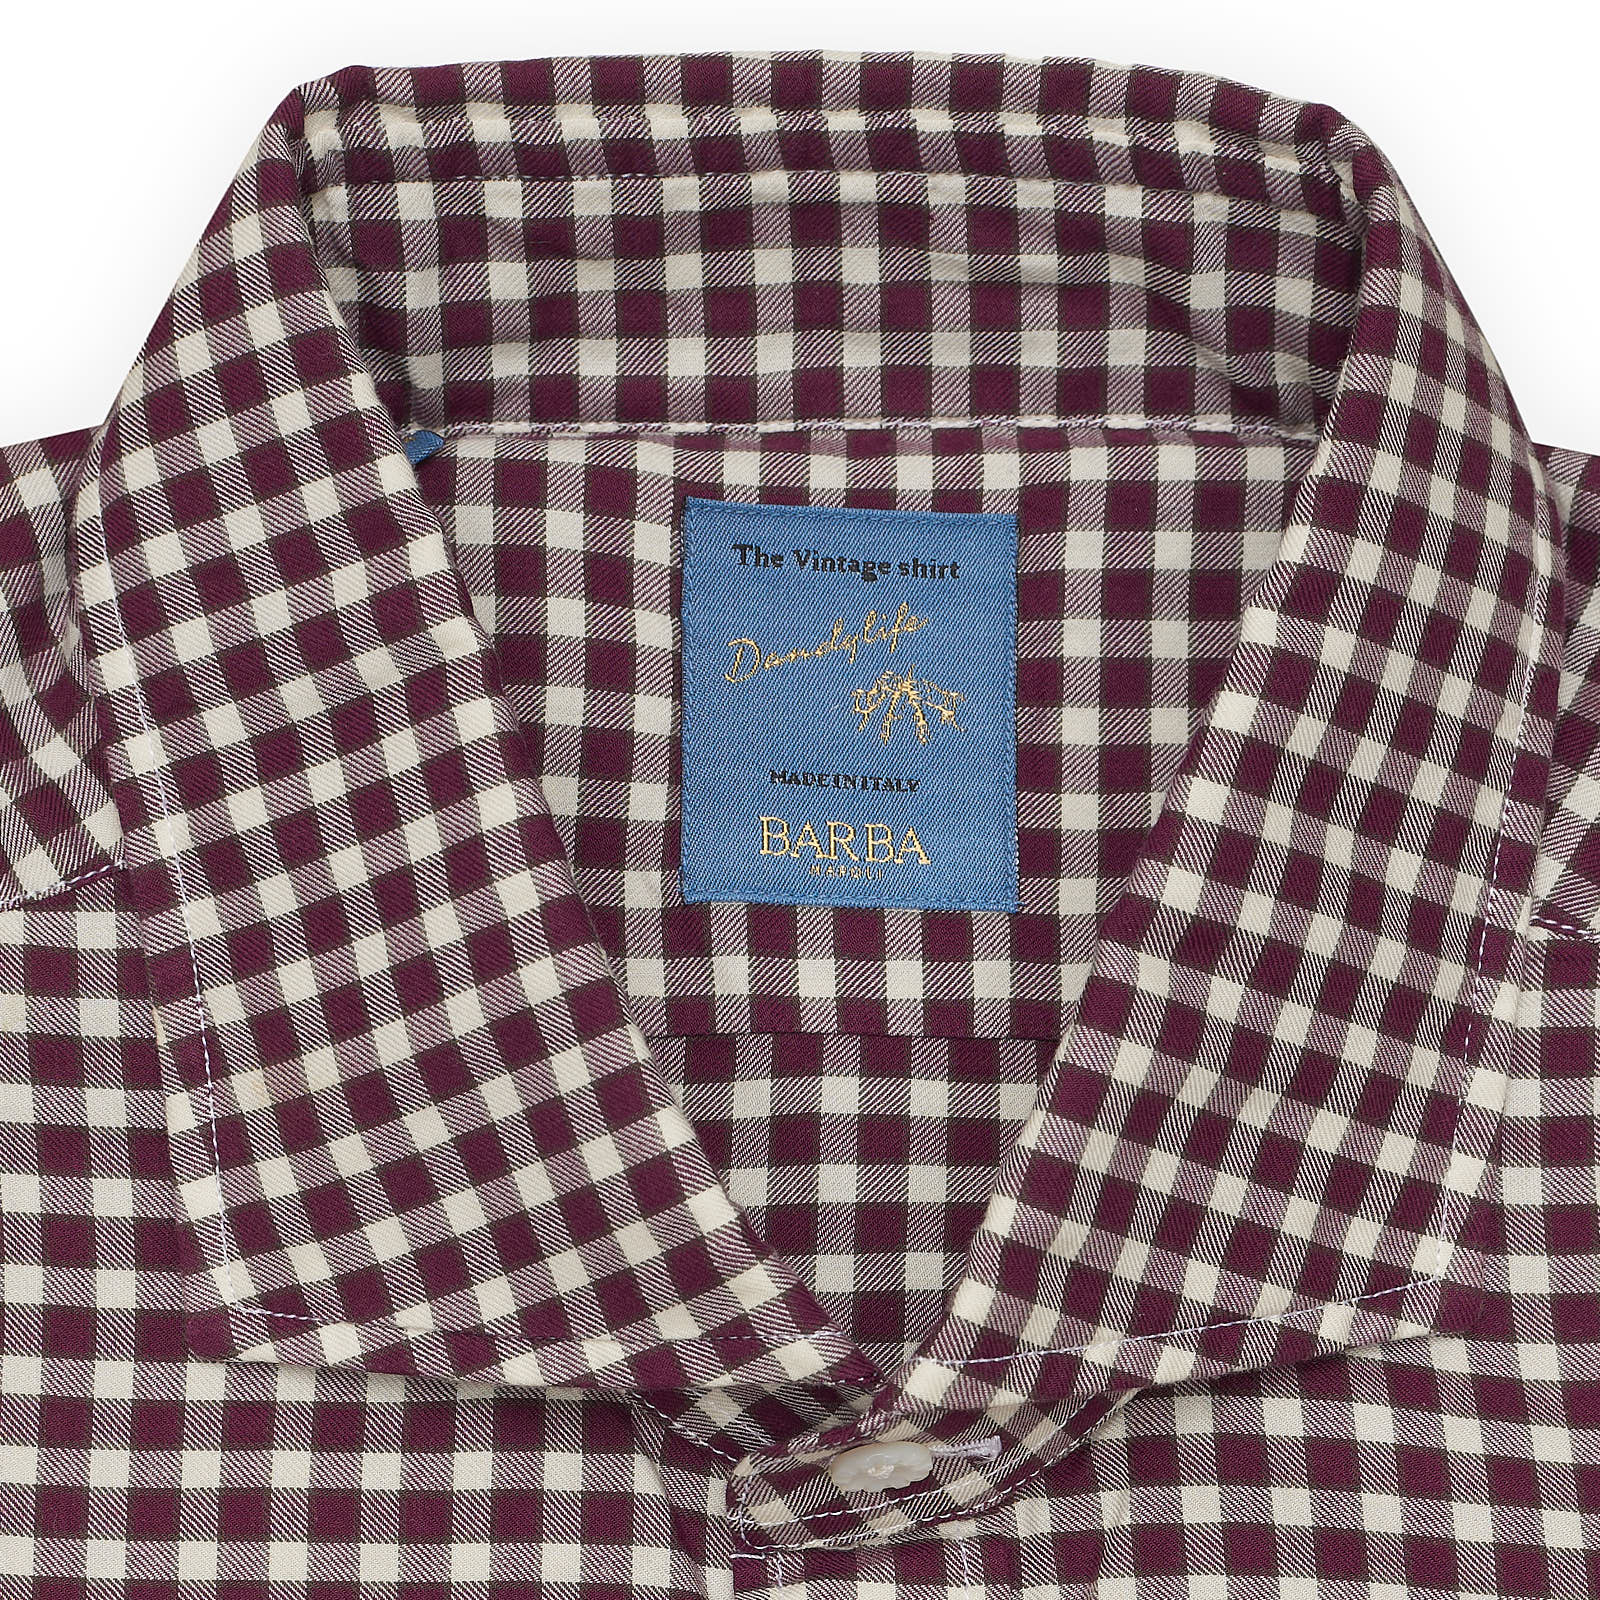 BARBA Napoli Dandylife "Vintage"  Gingham Check Cotton Shirt EU 40 NEW US 15.75